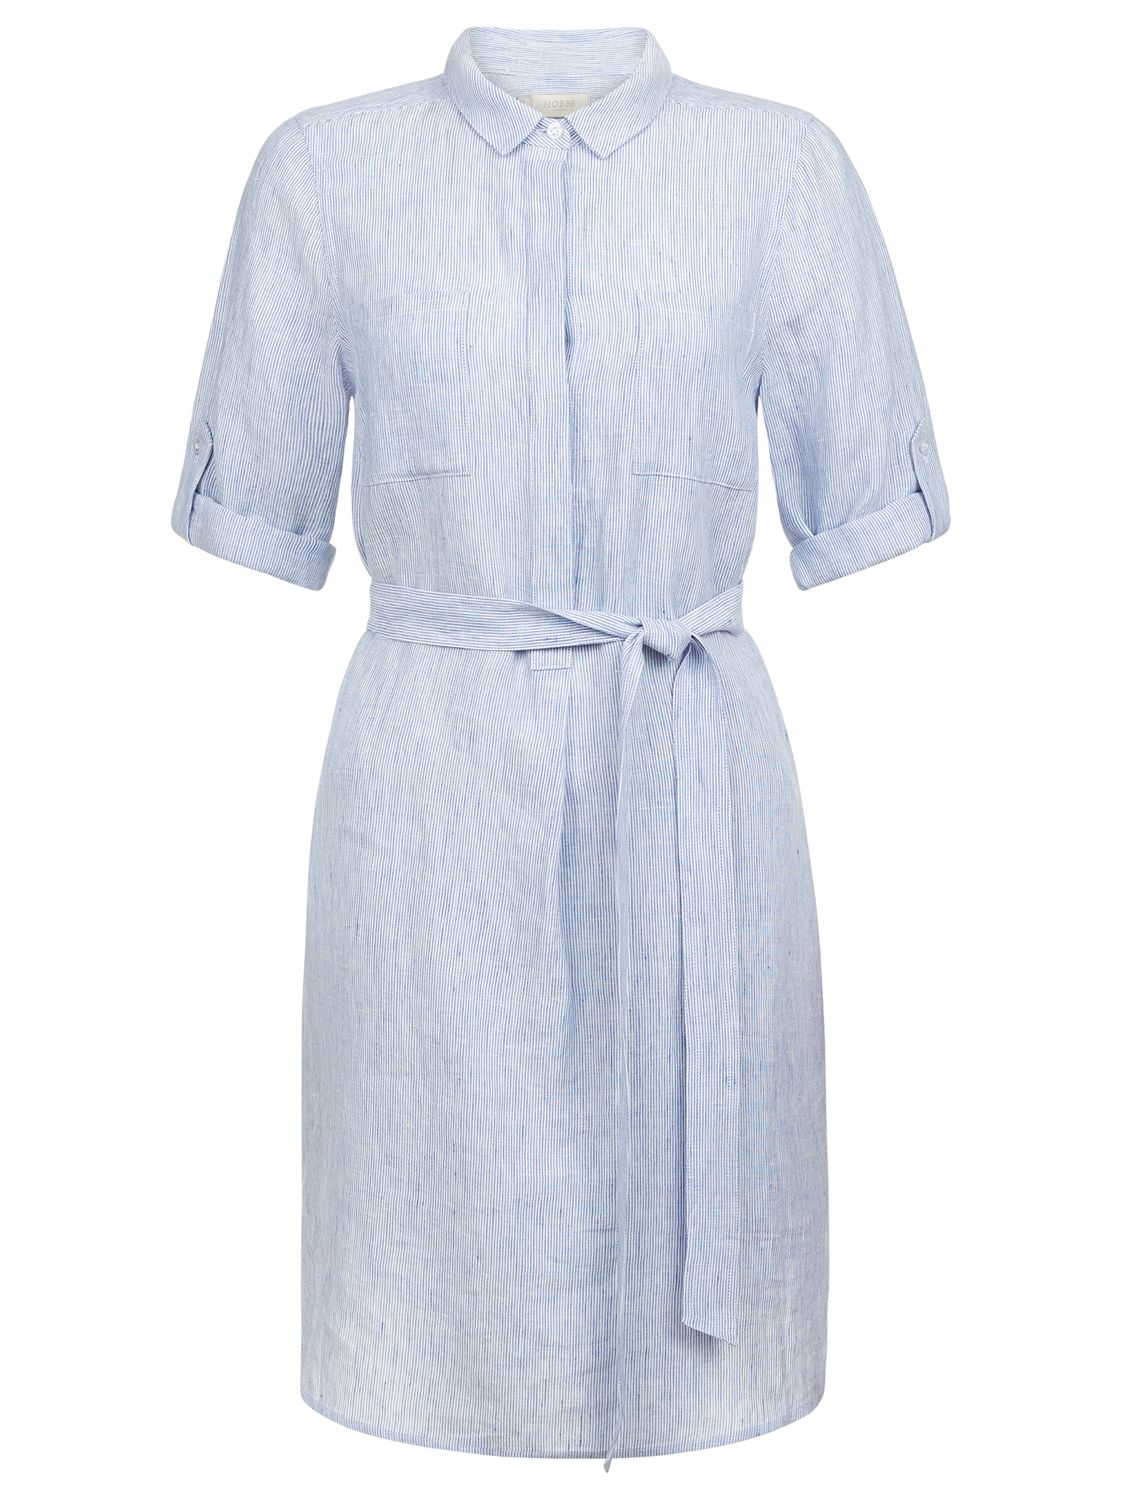 Hobbs Izzy Linen Shirt Dress, Blue Stripe